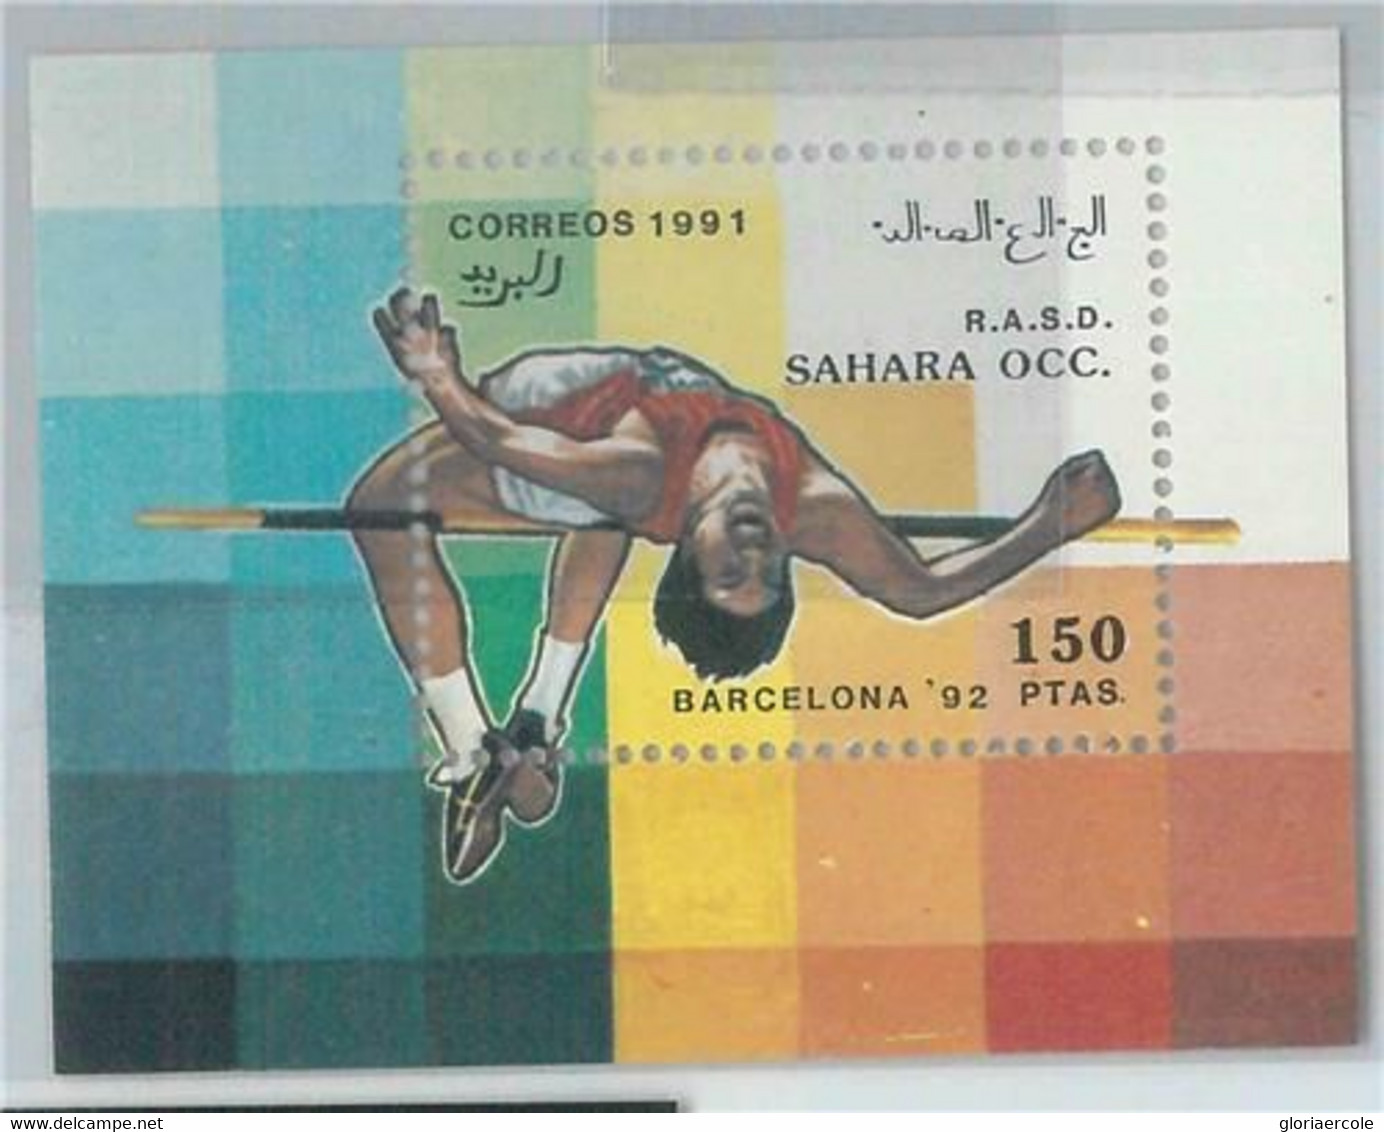 C0377 - Western SAHARA OCCIDENTAL - 1991  HIGH JUMP Barcelona 92  - Sheet  MNH - Jumping